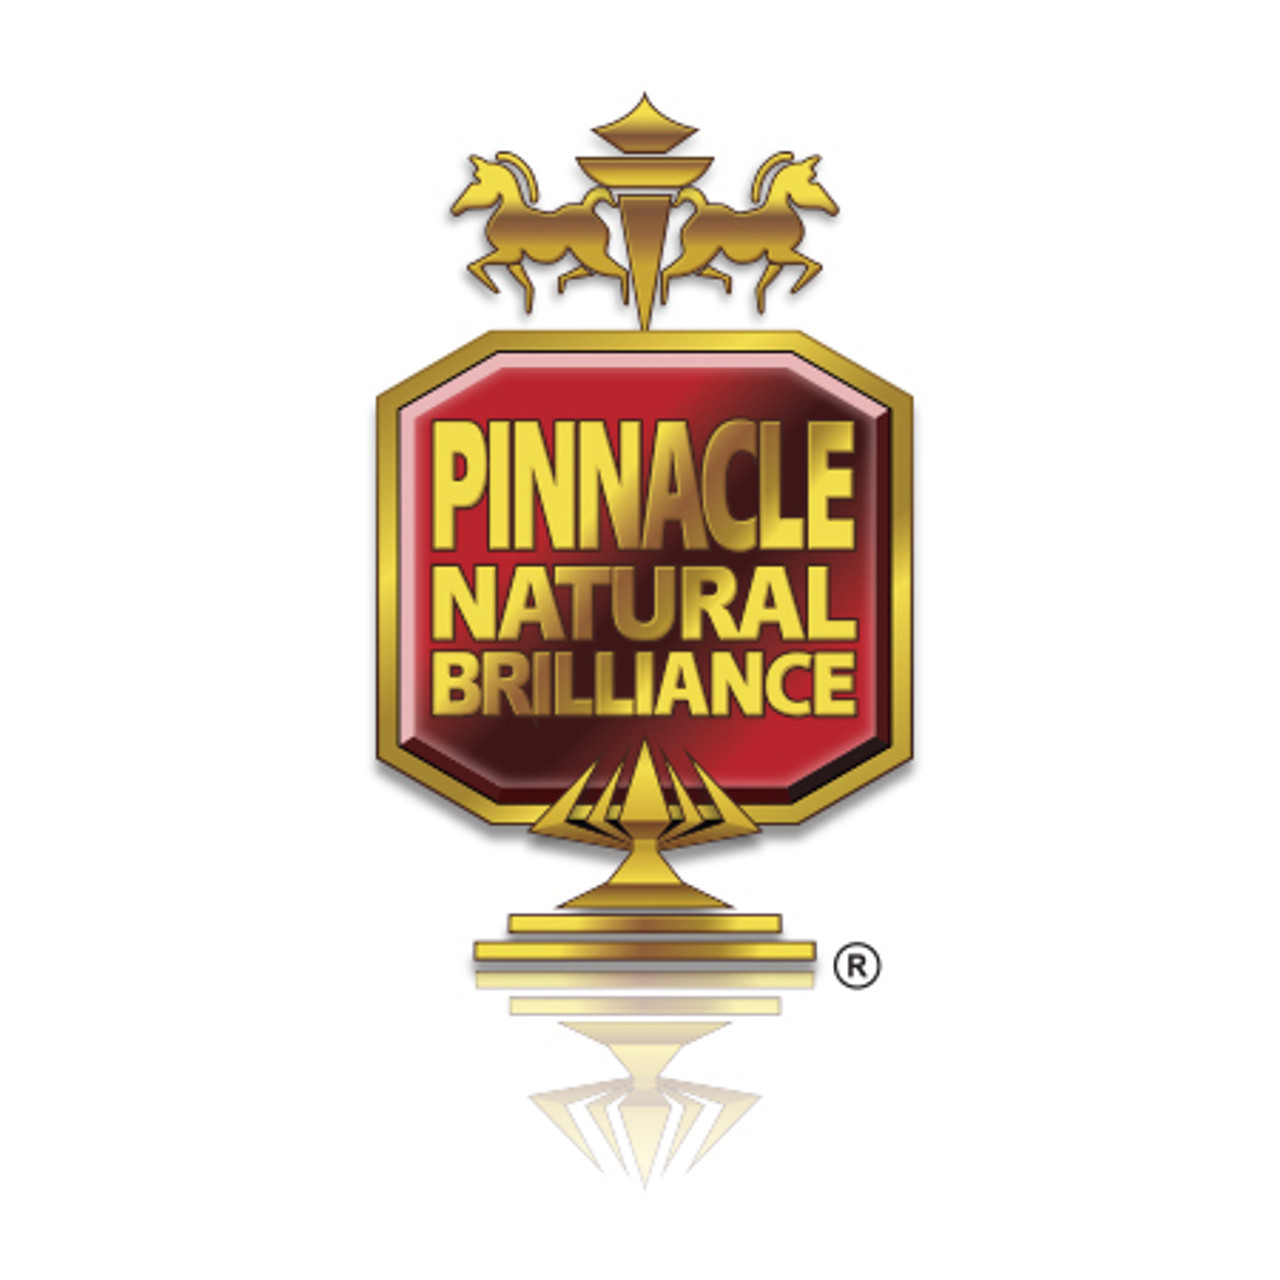 Pinnacle Natural Brilliance Detailing